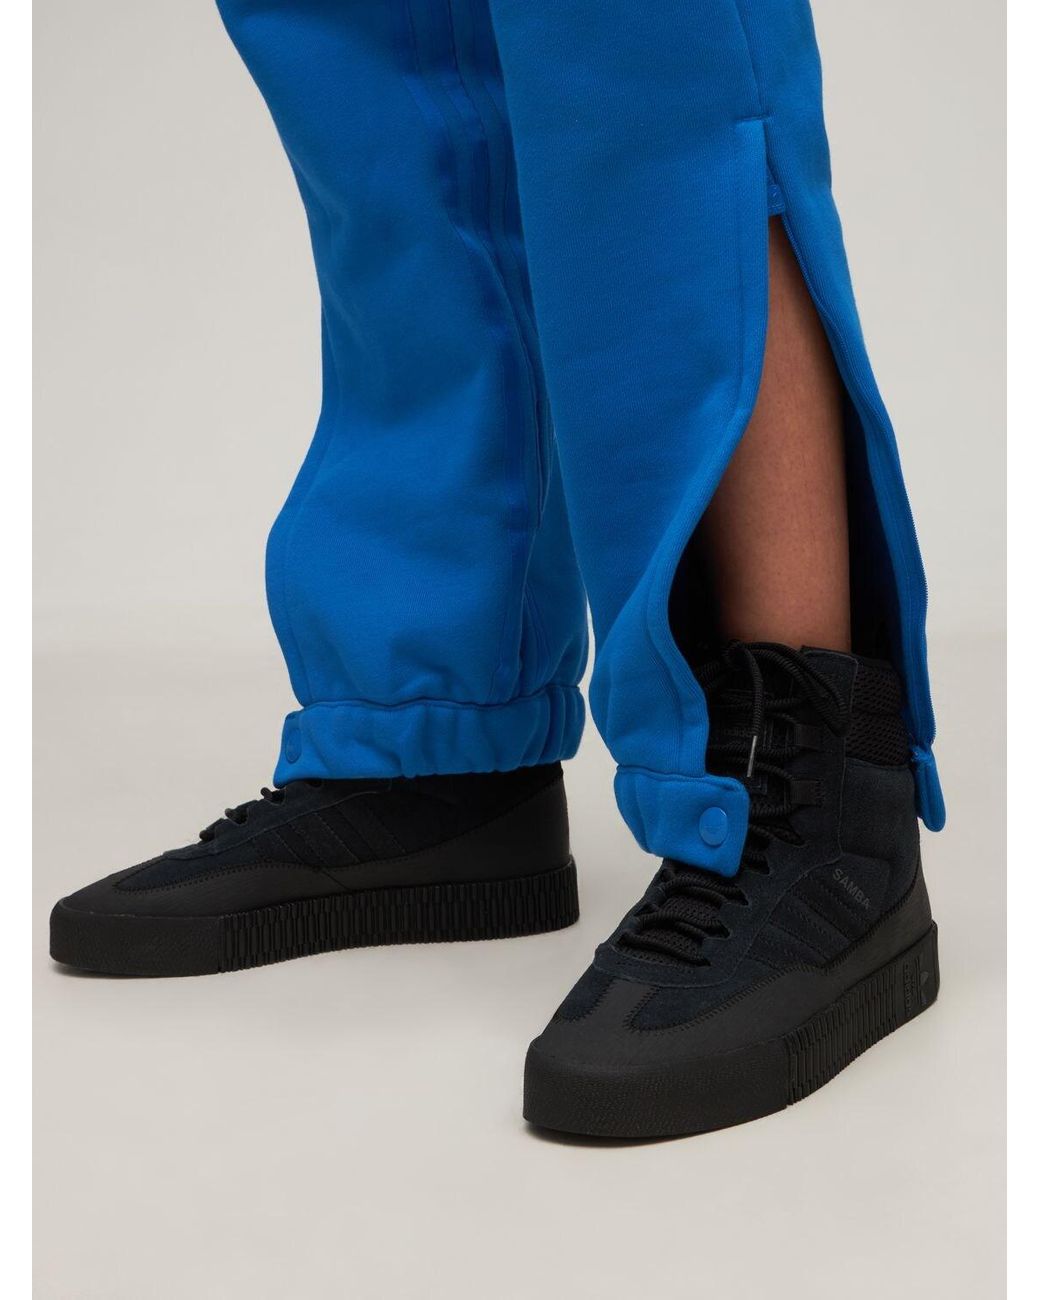 adidas Originals Samba Boots in Black | Lyst